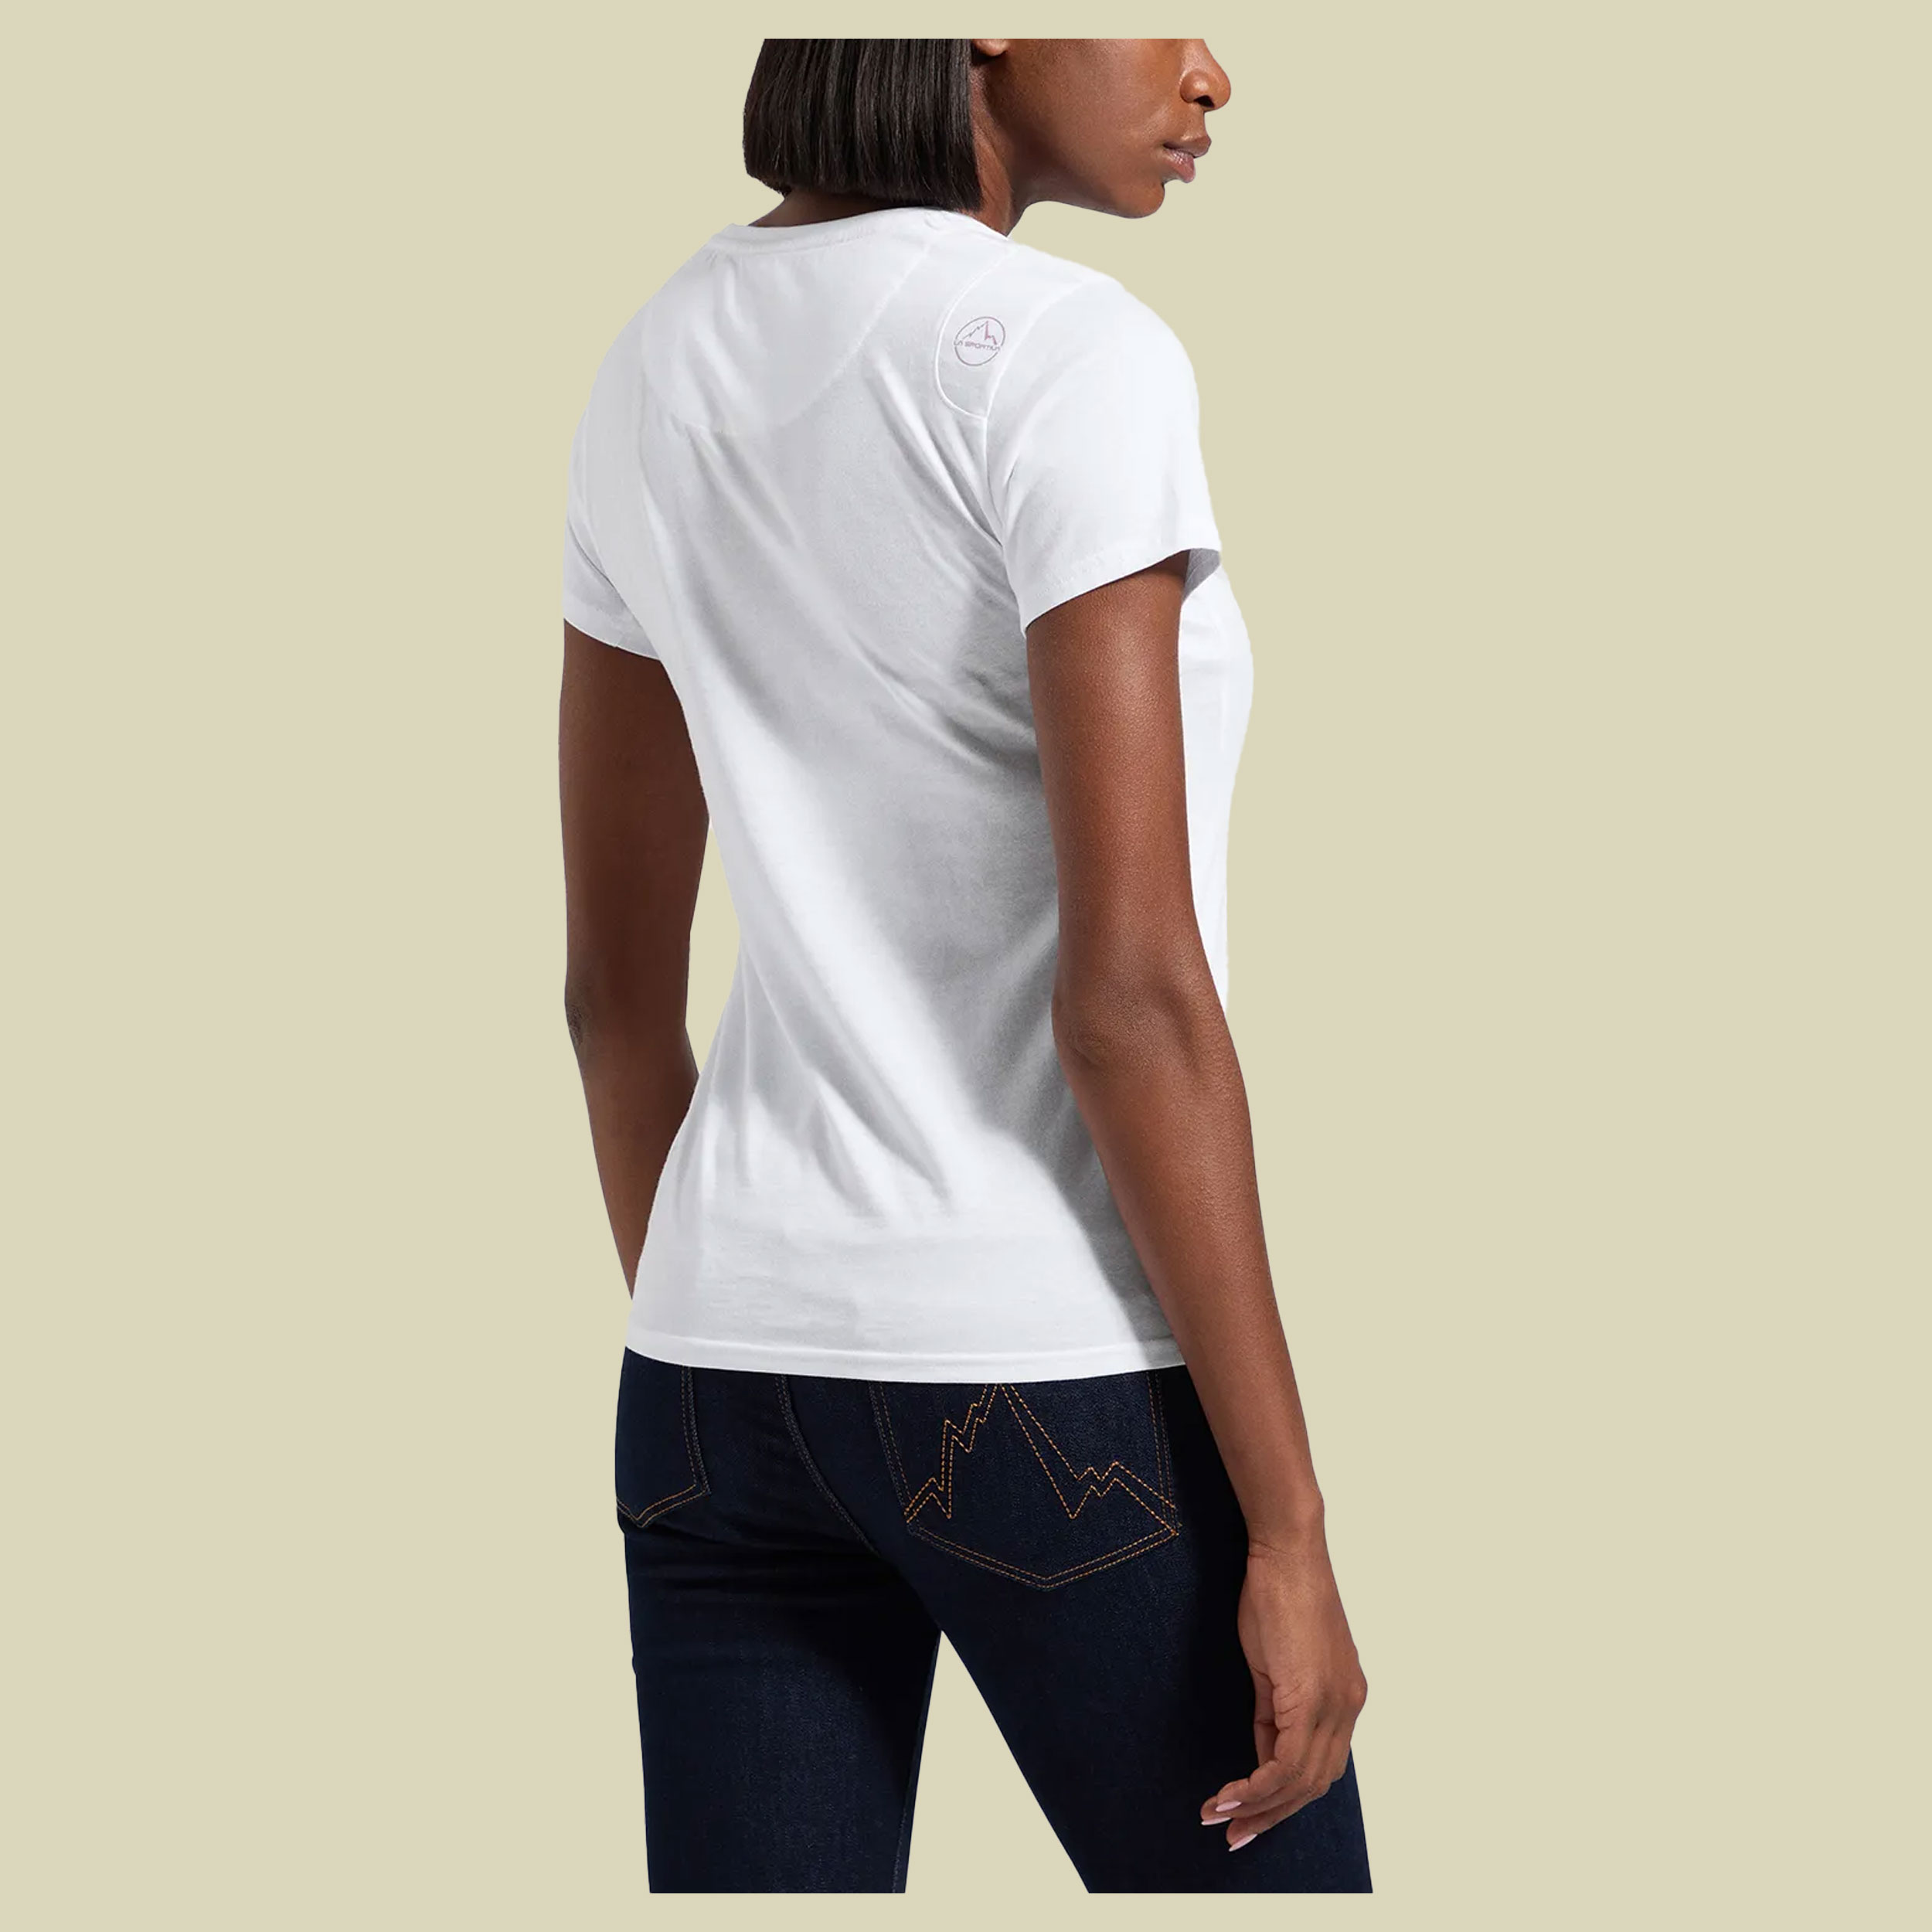 Windy T-Shirt Women XL weiß - white/rose